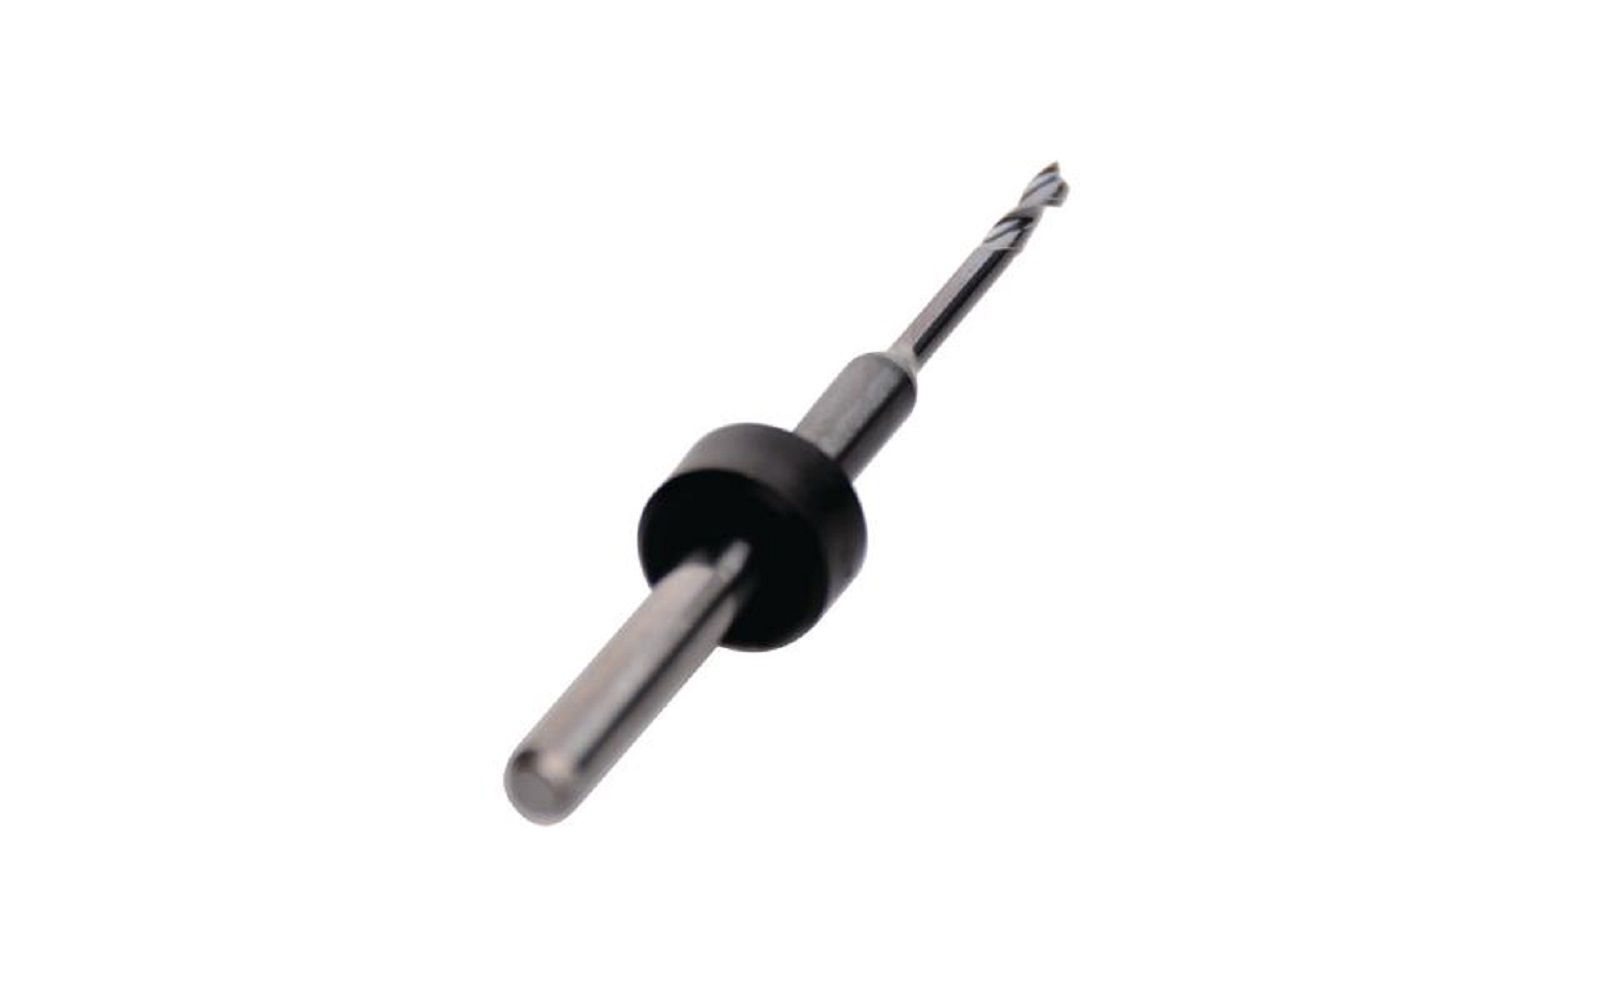 Planmill 50 s cad/cam shaft milling tool – t5/t10/t17, 1. 5 mm diameter, 3 mm shaft, universal, 2 cutters long